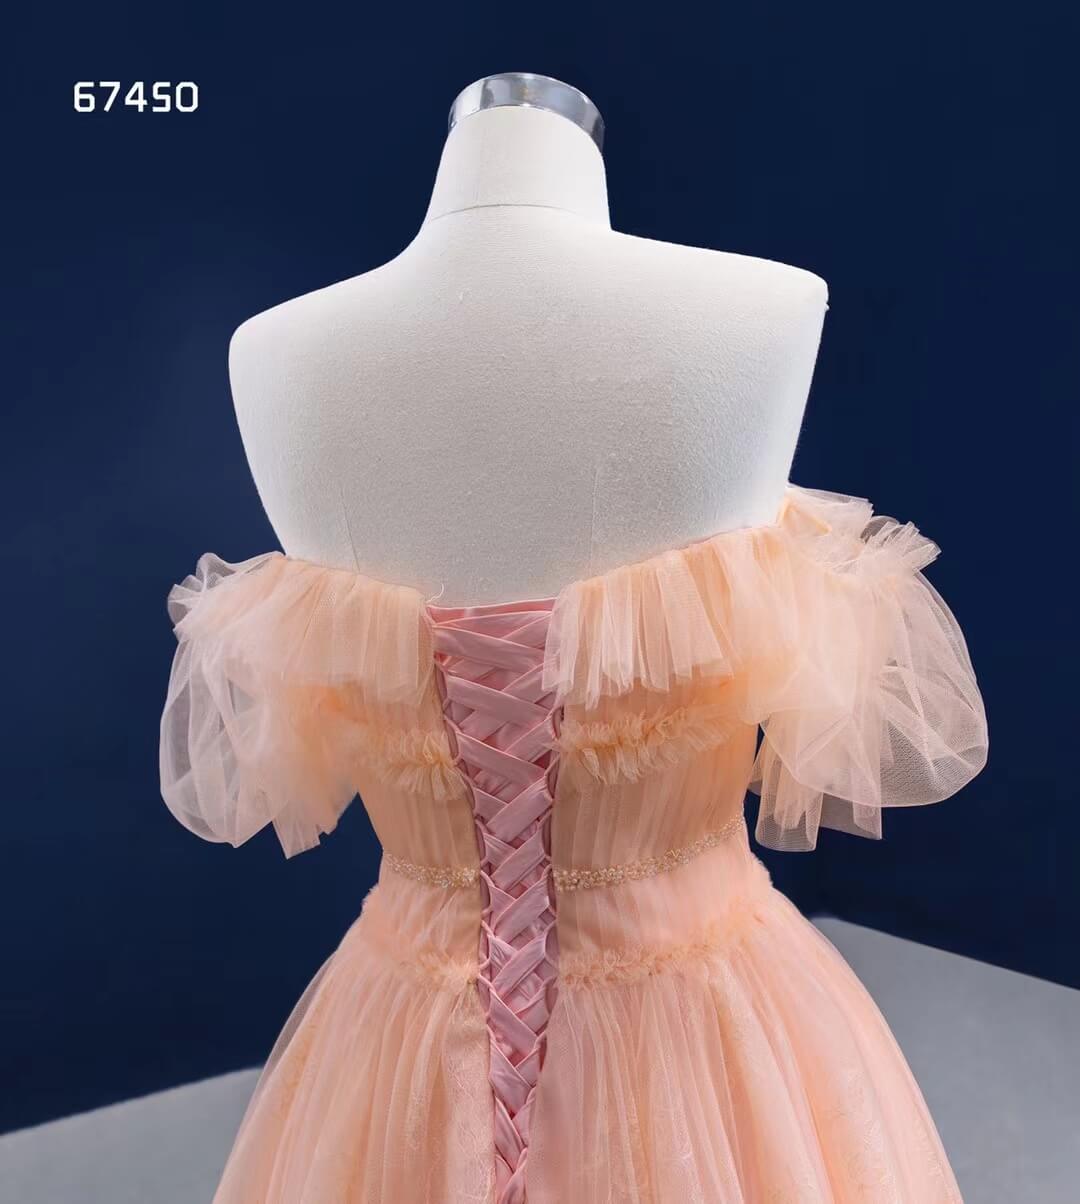 A-line Peach Tulle Prom Dresses Off the Shoulder Long Formal Dress 67450-prom dresses-Viniodress-Viniodress